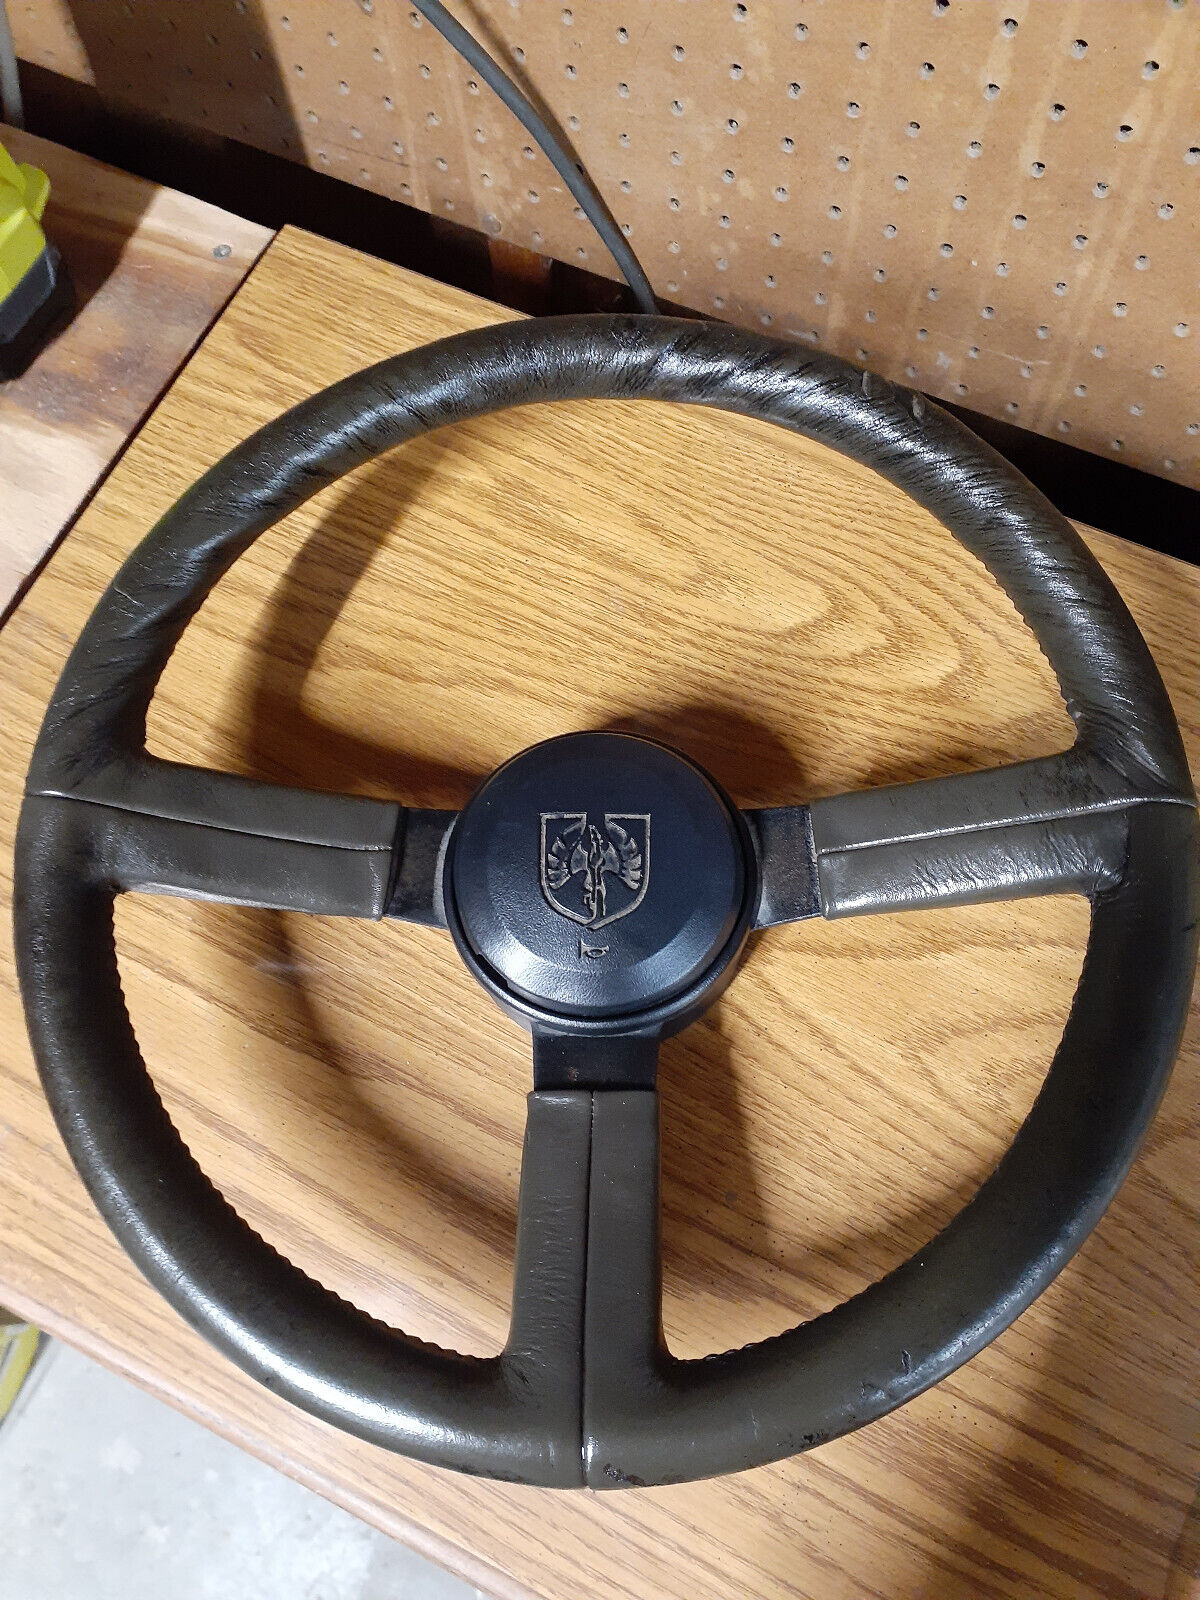 1985 Pontiac *BROWN* Fiero Leather Wrap Steering Wheel - Fair Condition